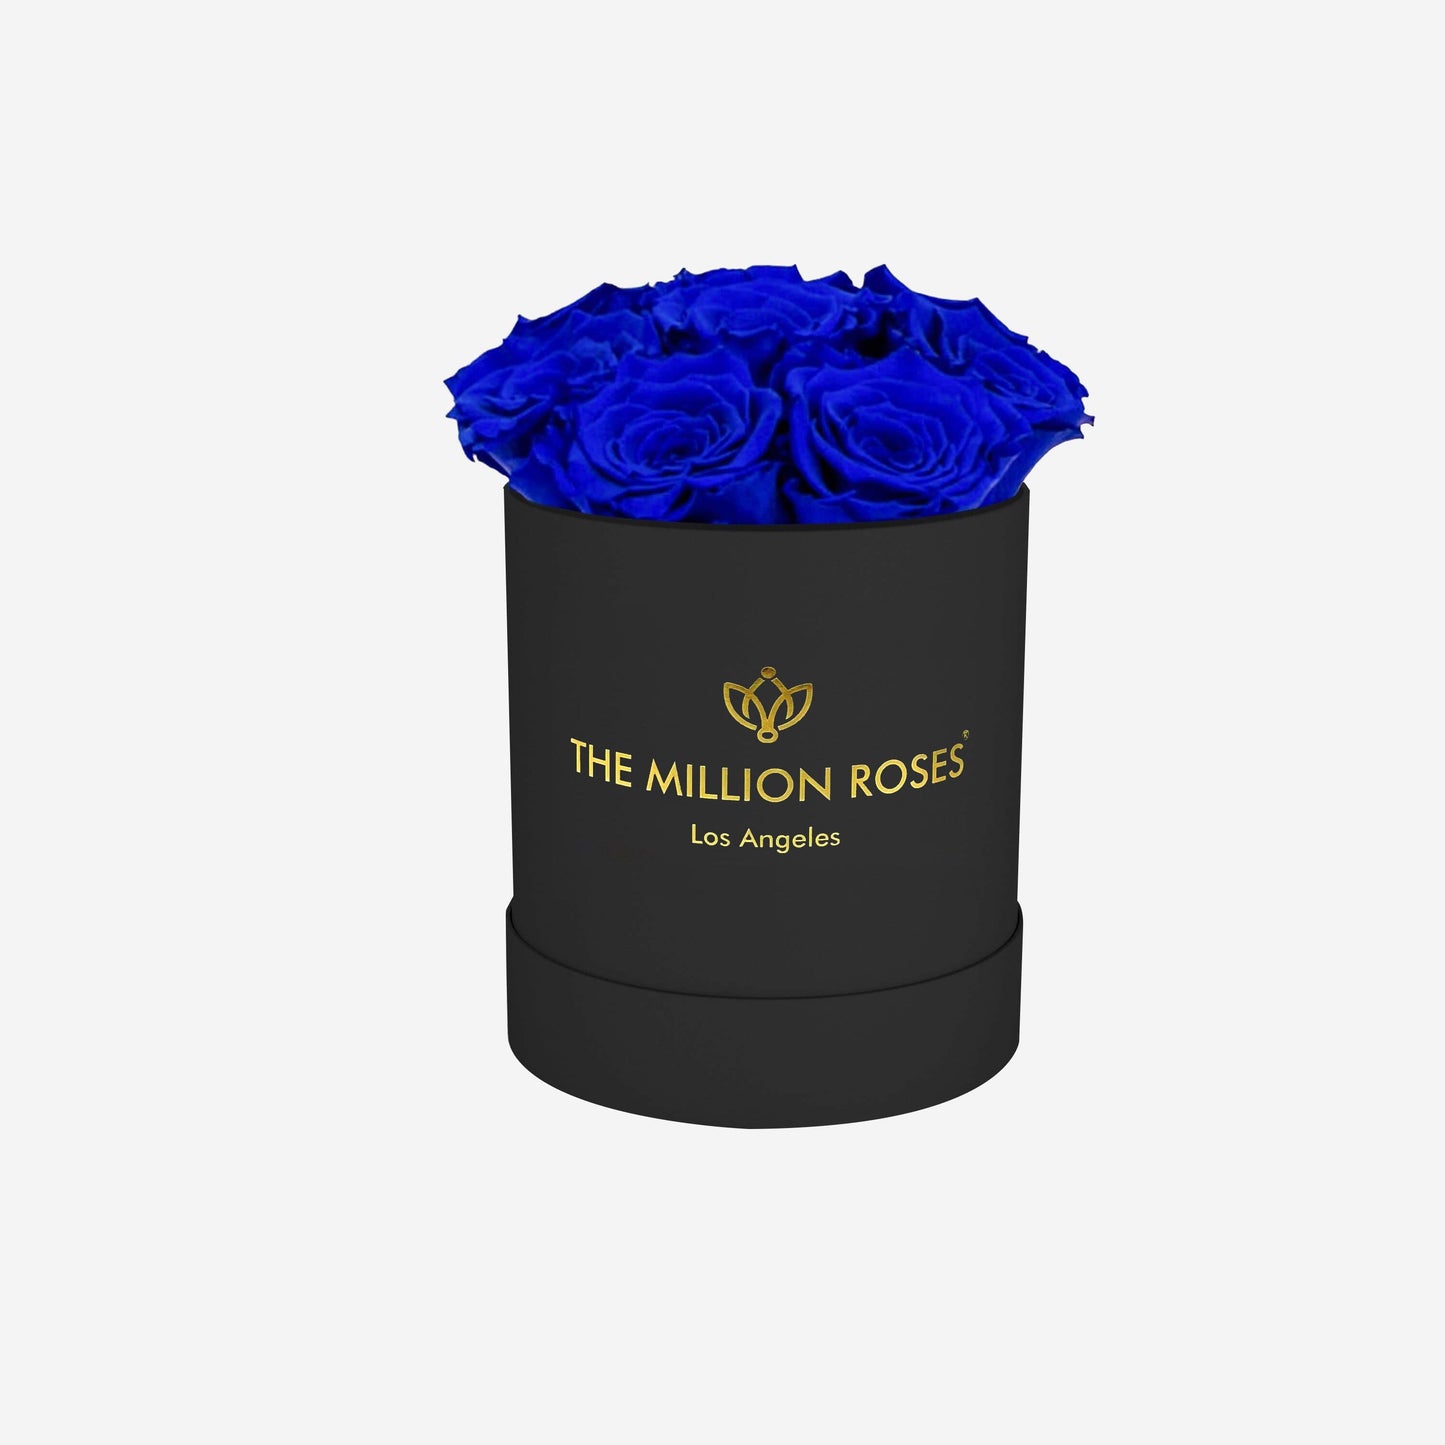 Aqua Blue Roses  Black Love Box – The One Roses